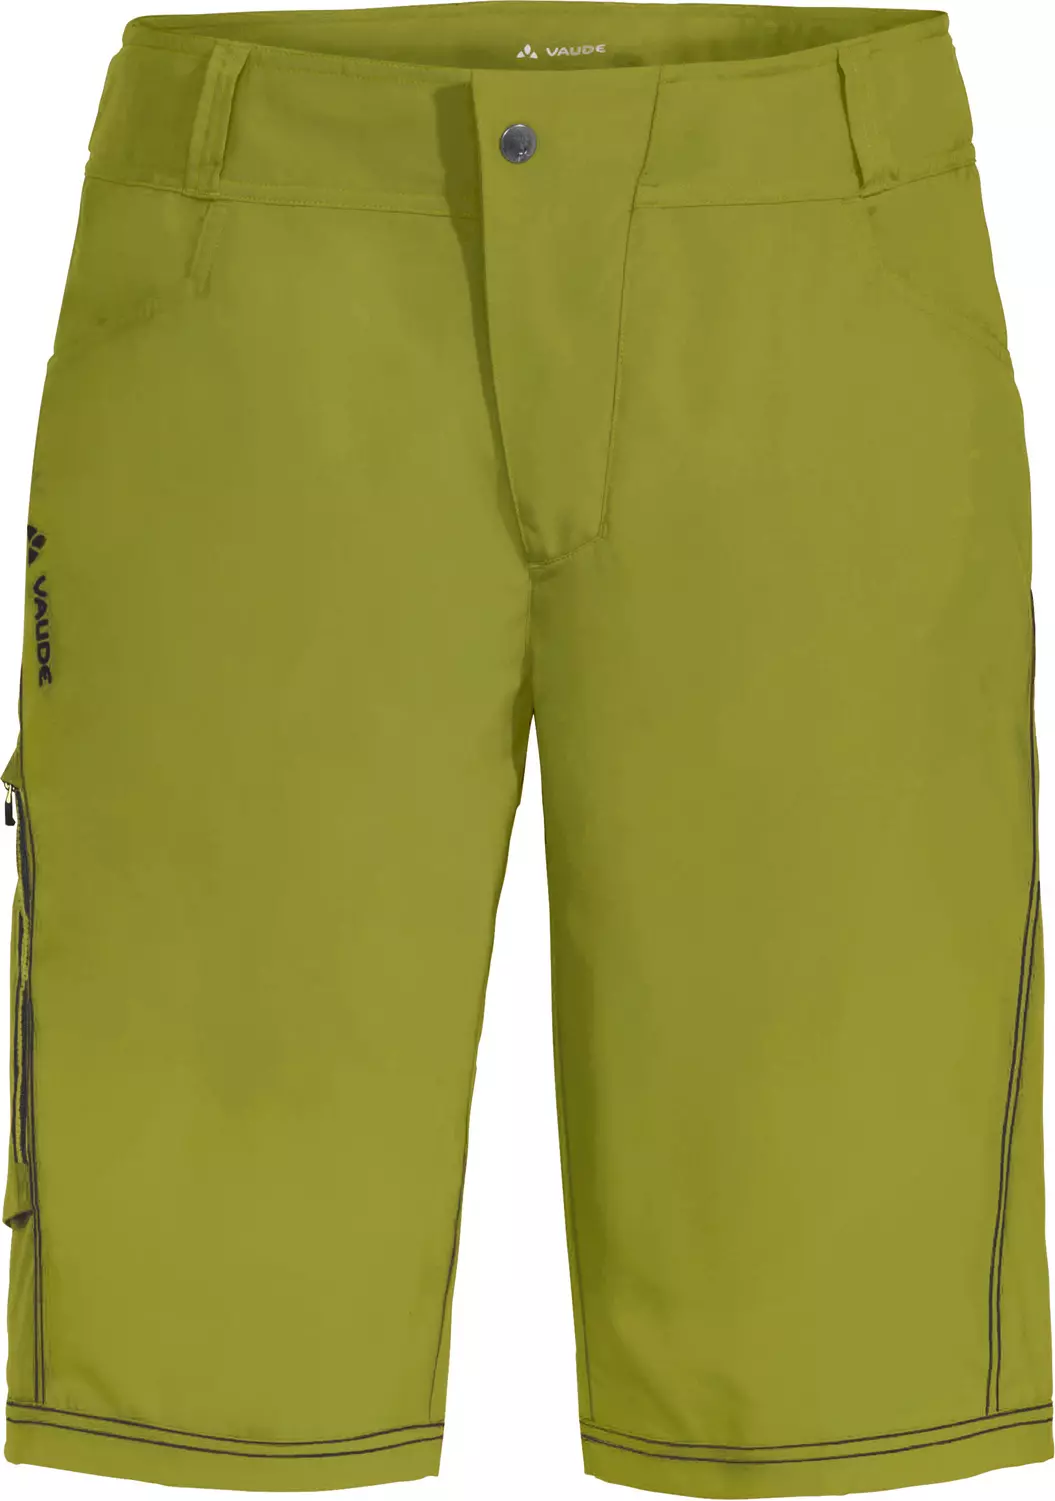 Men\'s bicycle shorts with Vaude CYCLING MEN\'S insole \\ | green i Bird Dystrybutor Green CLOTHING odzież Red BRANDS - Ledro \\ Gadżety Markowe | reklamowa VAUDE